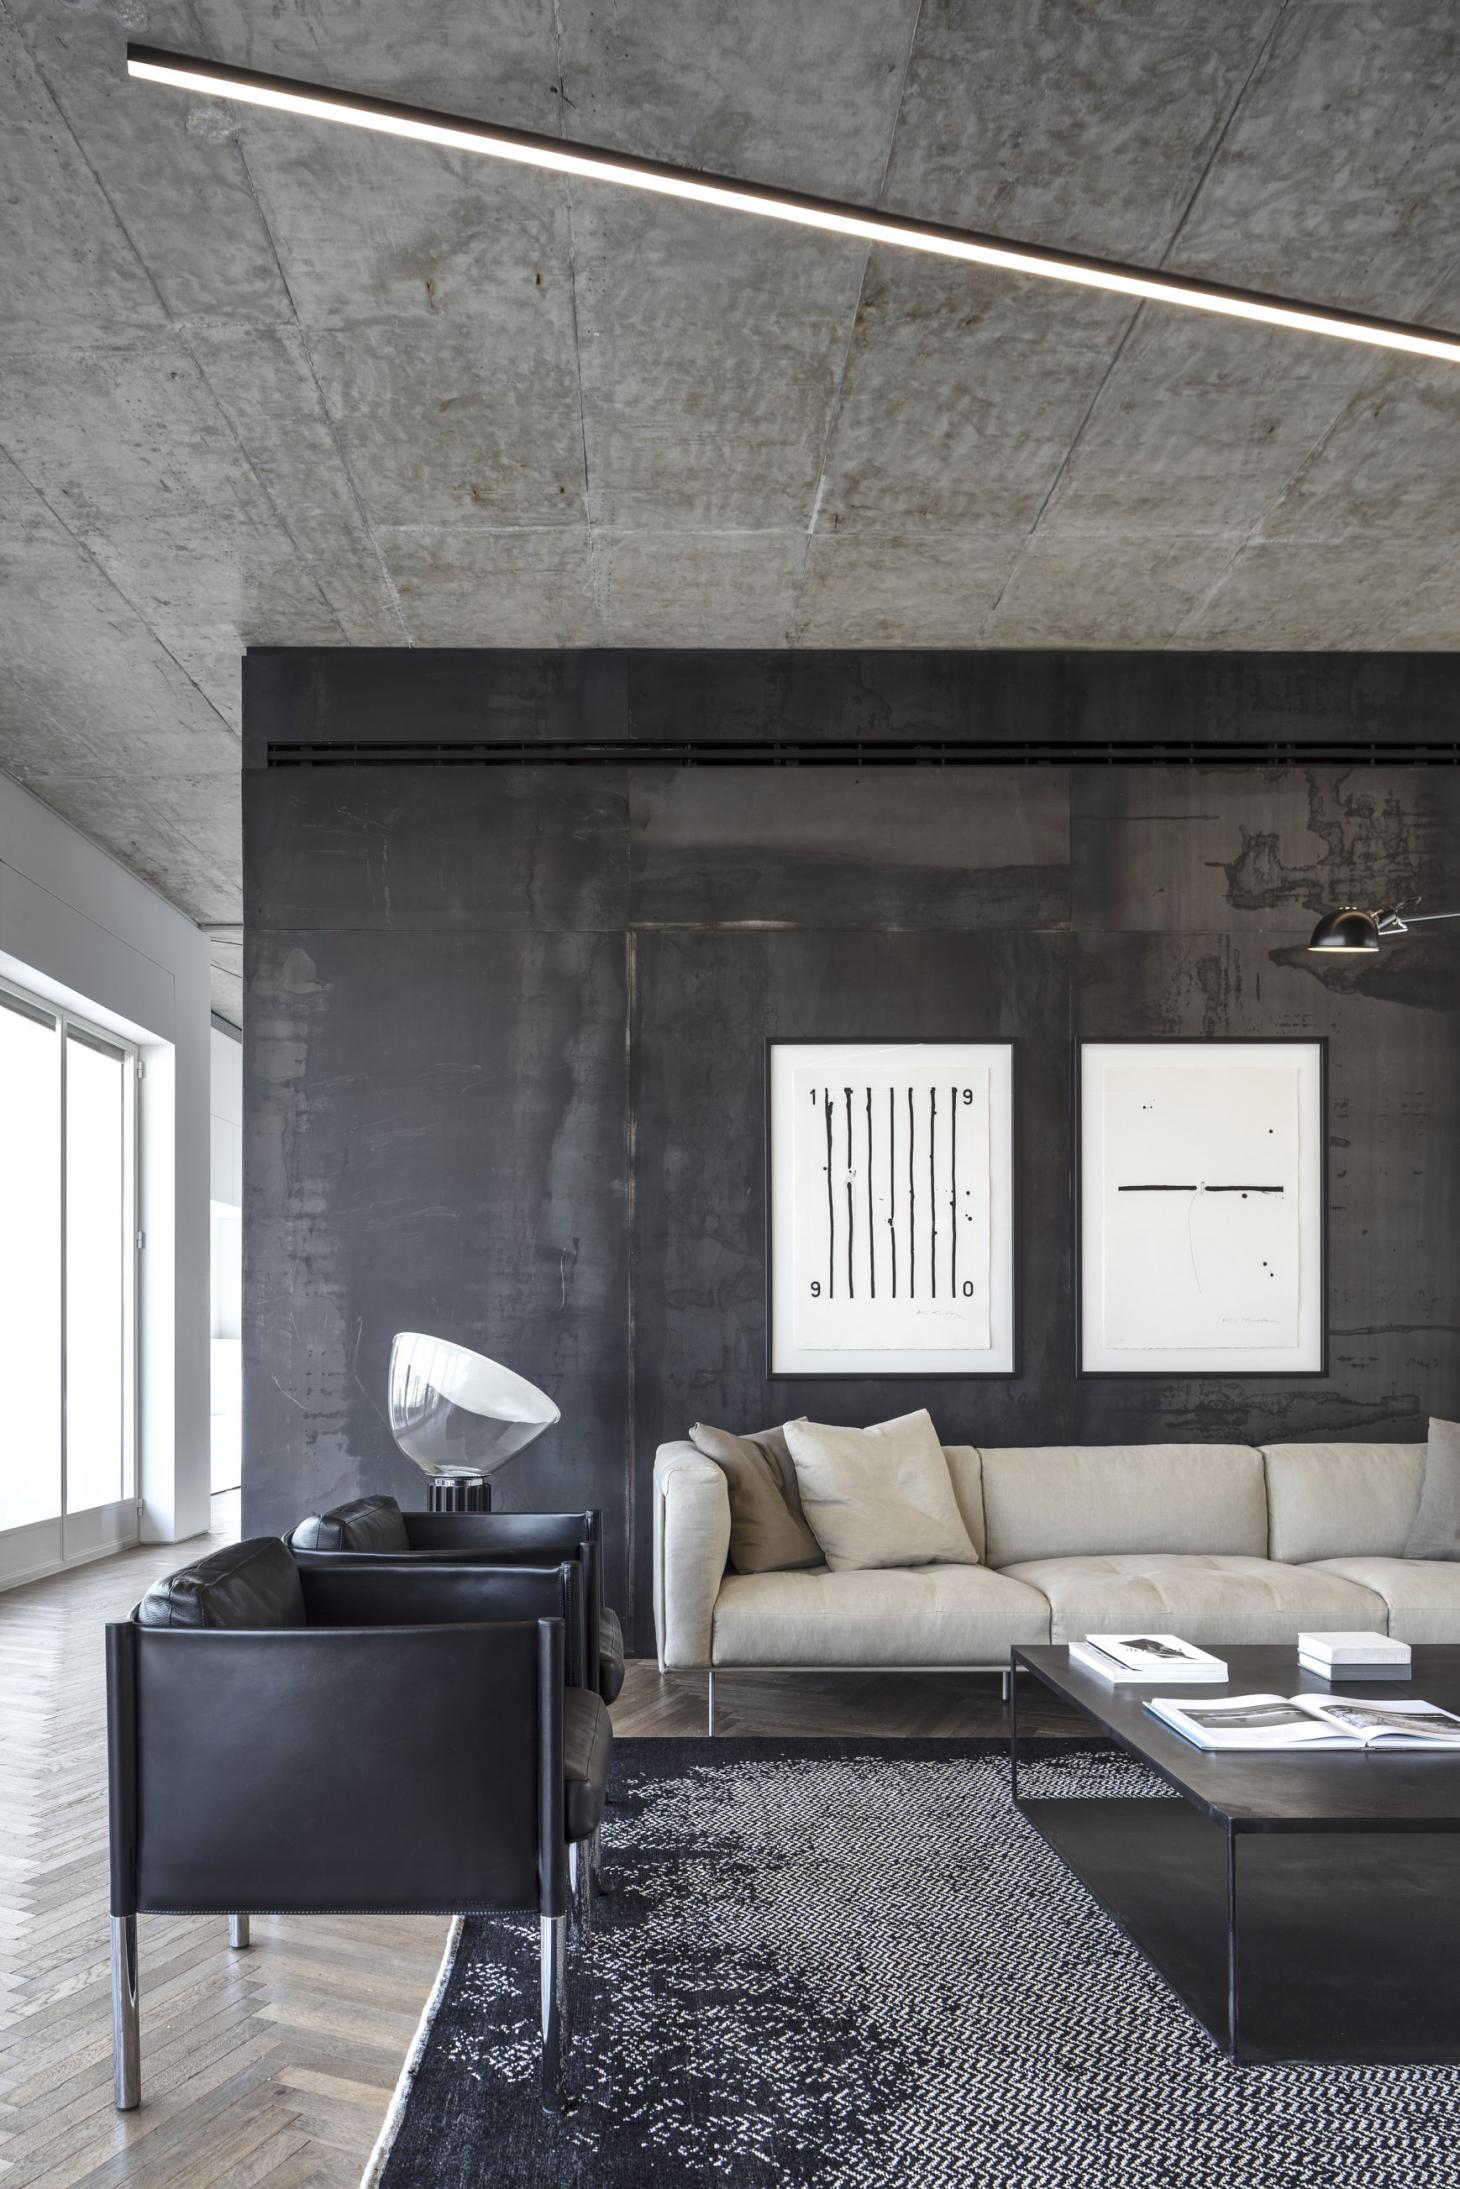 Bauhaus Loft Interior Tel Aviv Designed By Iris Axelrod - Bauhaus Interior Design Style - HD Wallpaper 